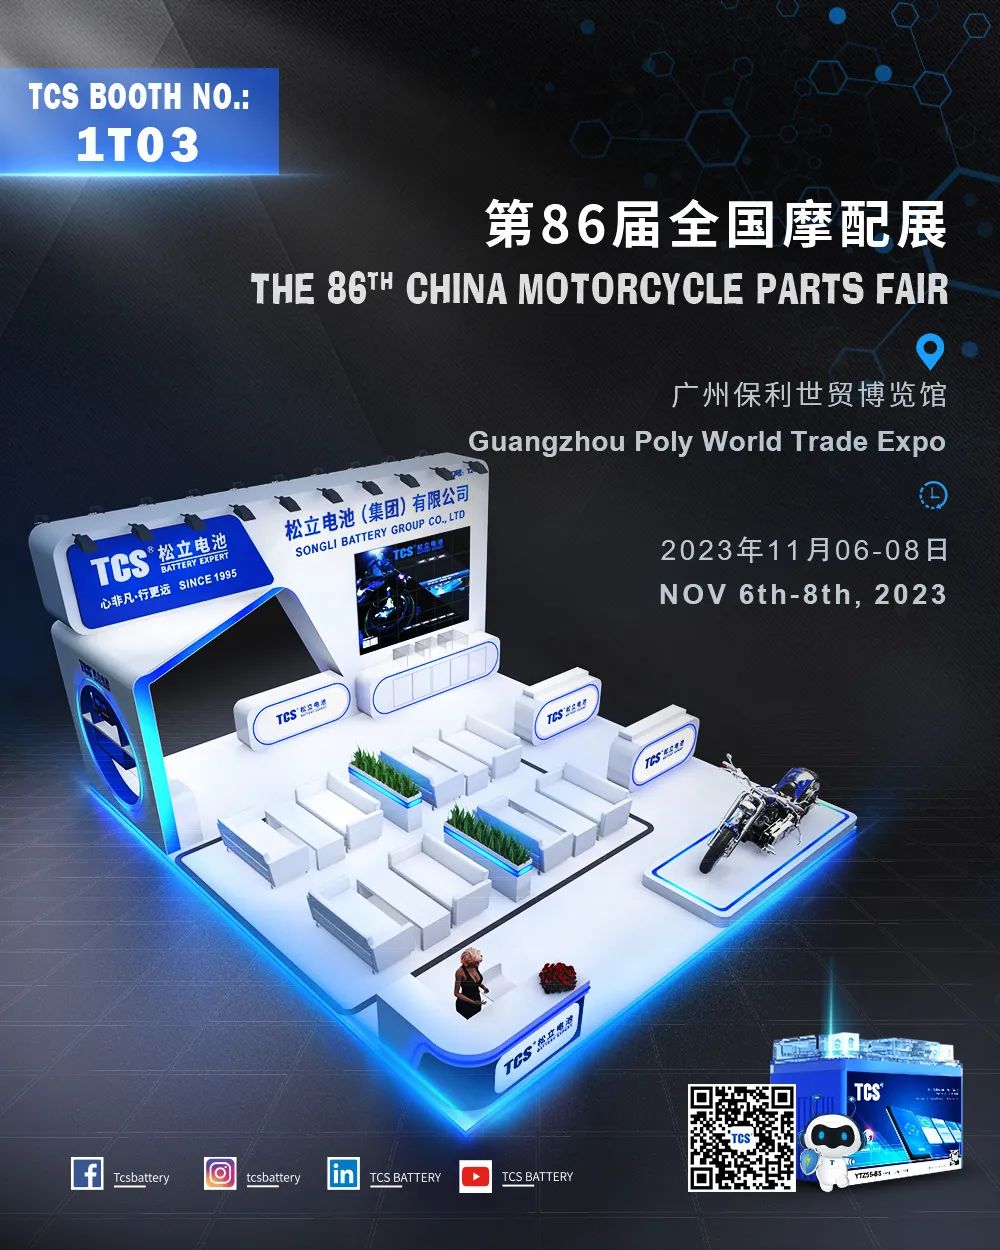 The 86th China Motorcycle Parts Fair